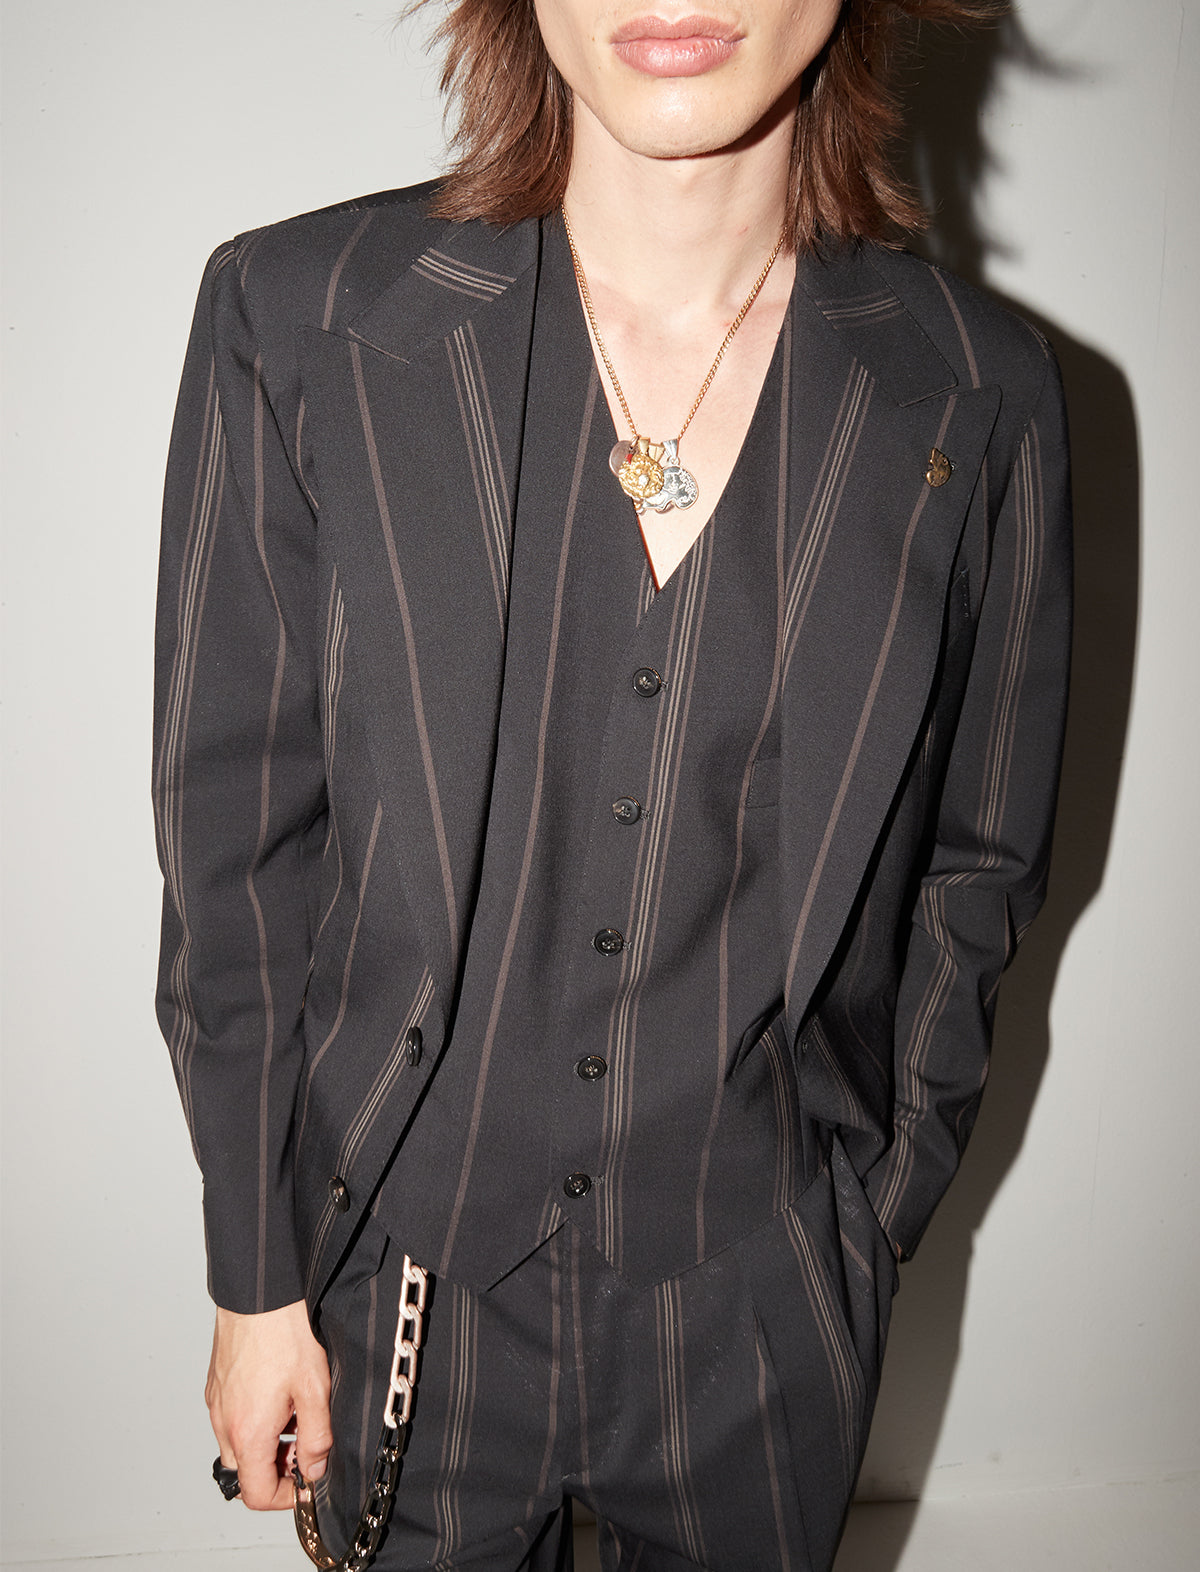 GABRIELE PASINI Milano 3-Piece Suit in Black/ Multi Stripes